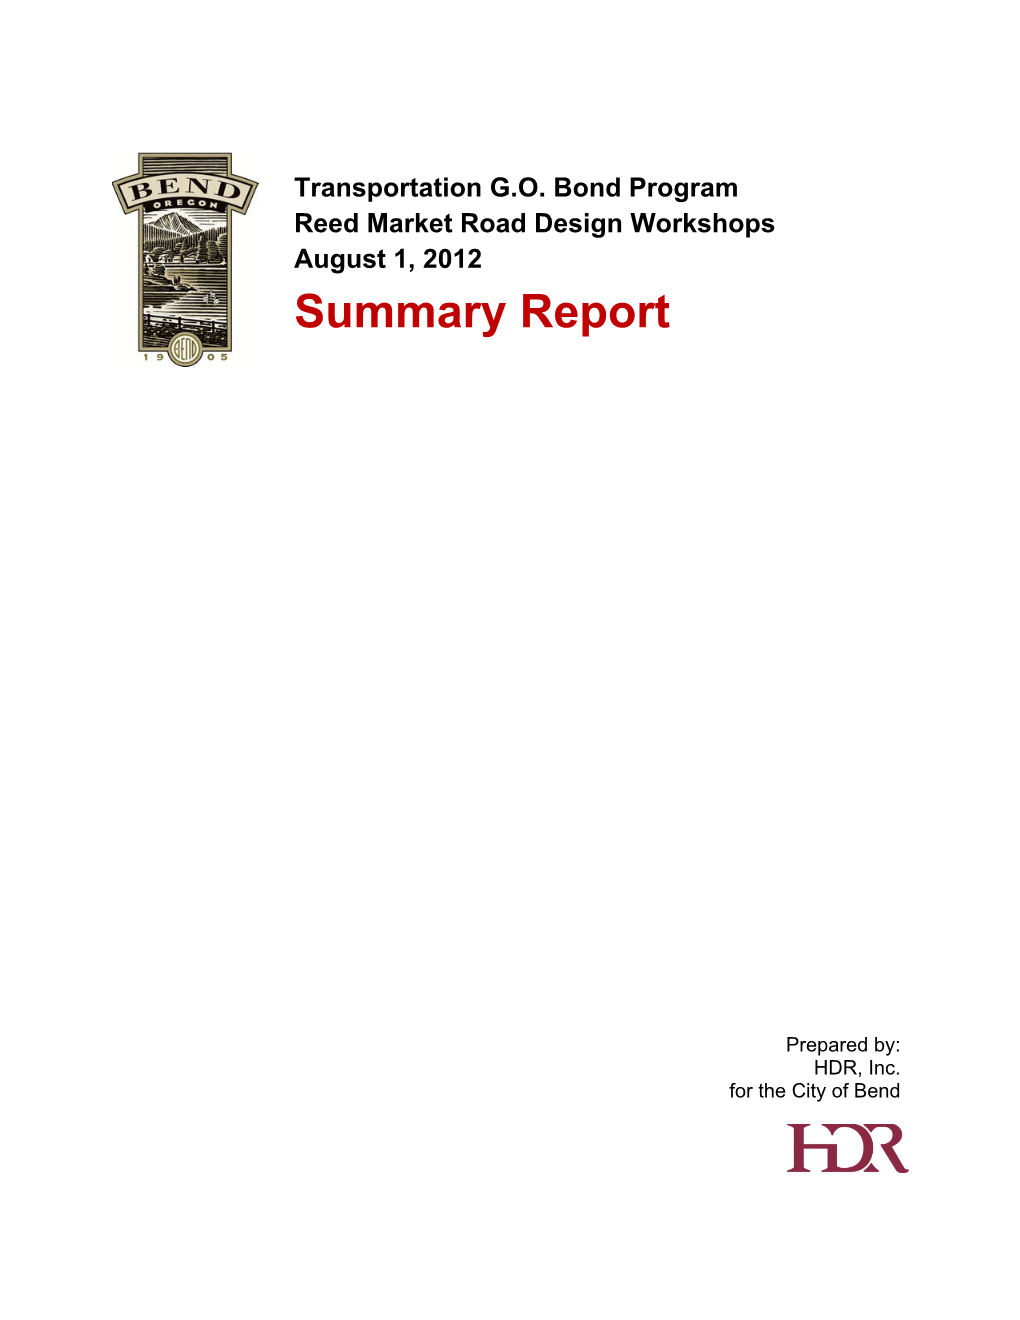 Workshops Summary Report